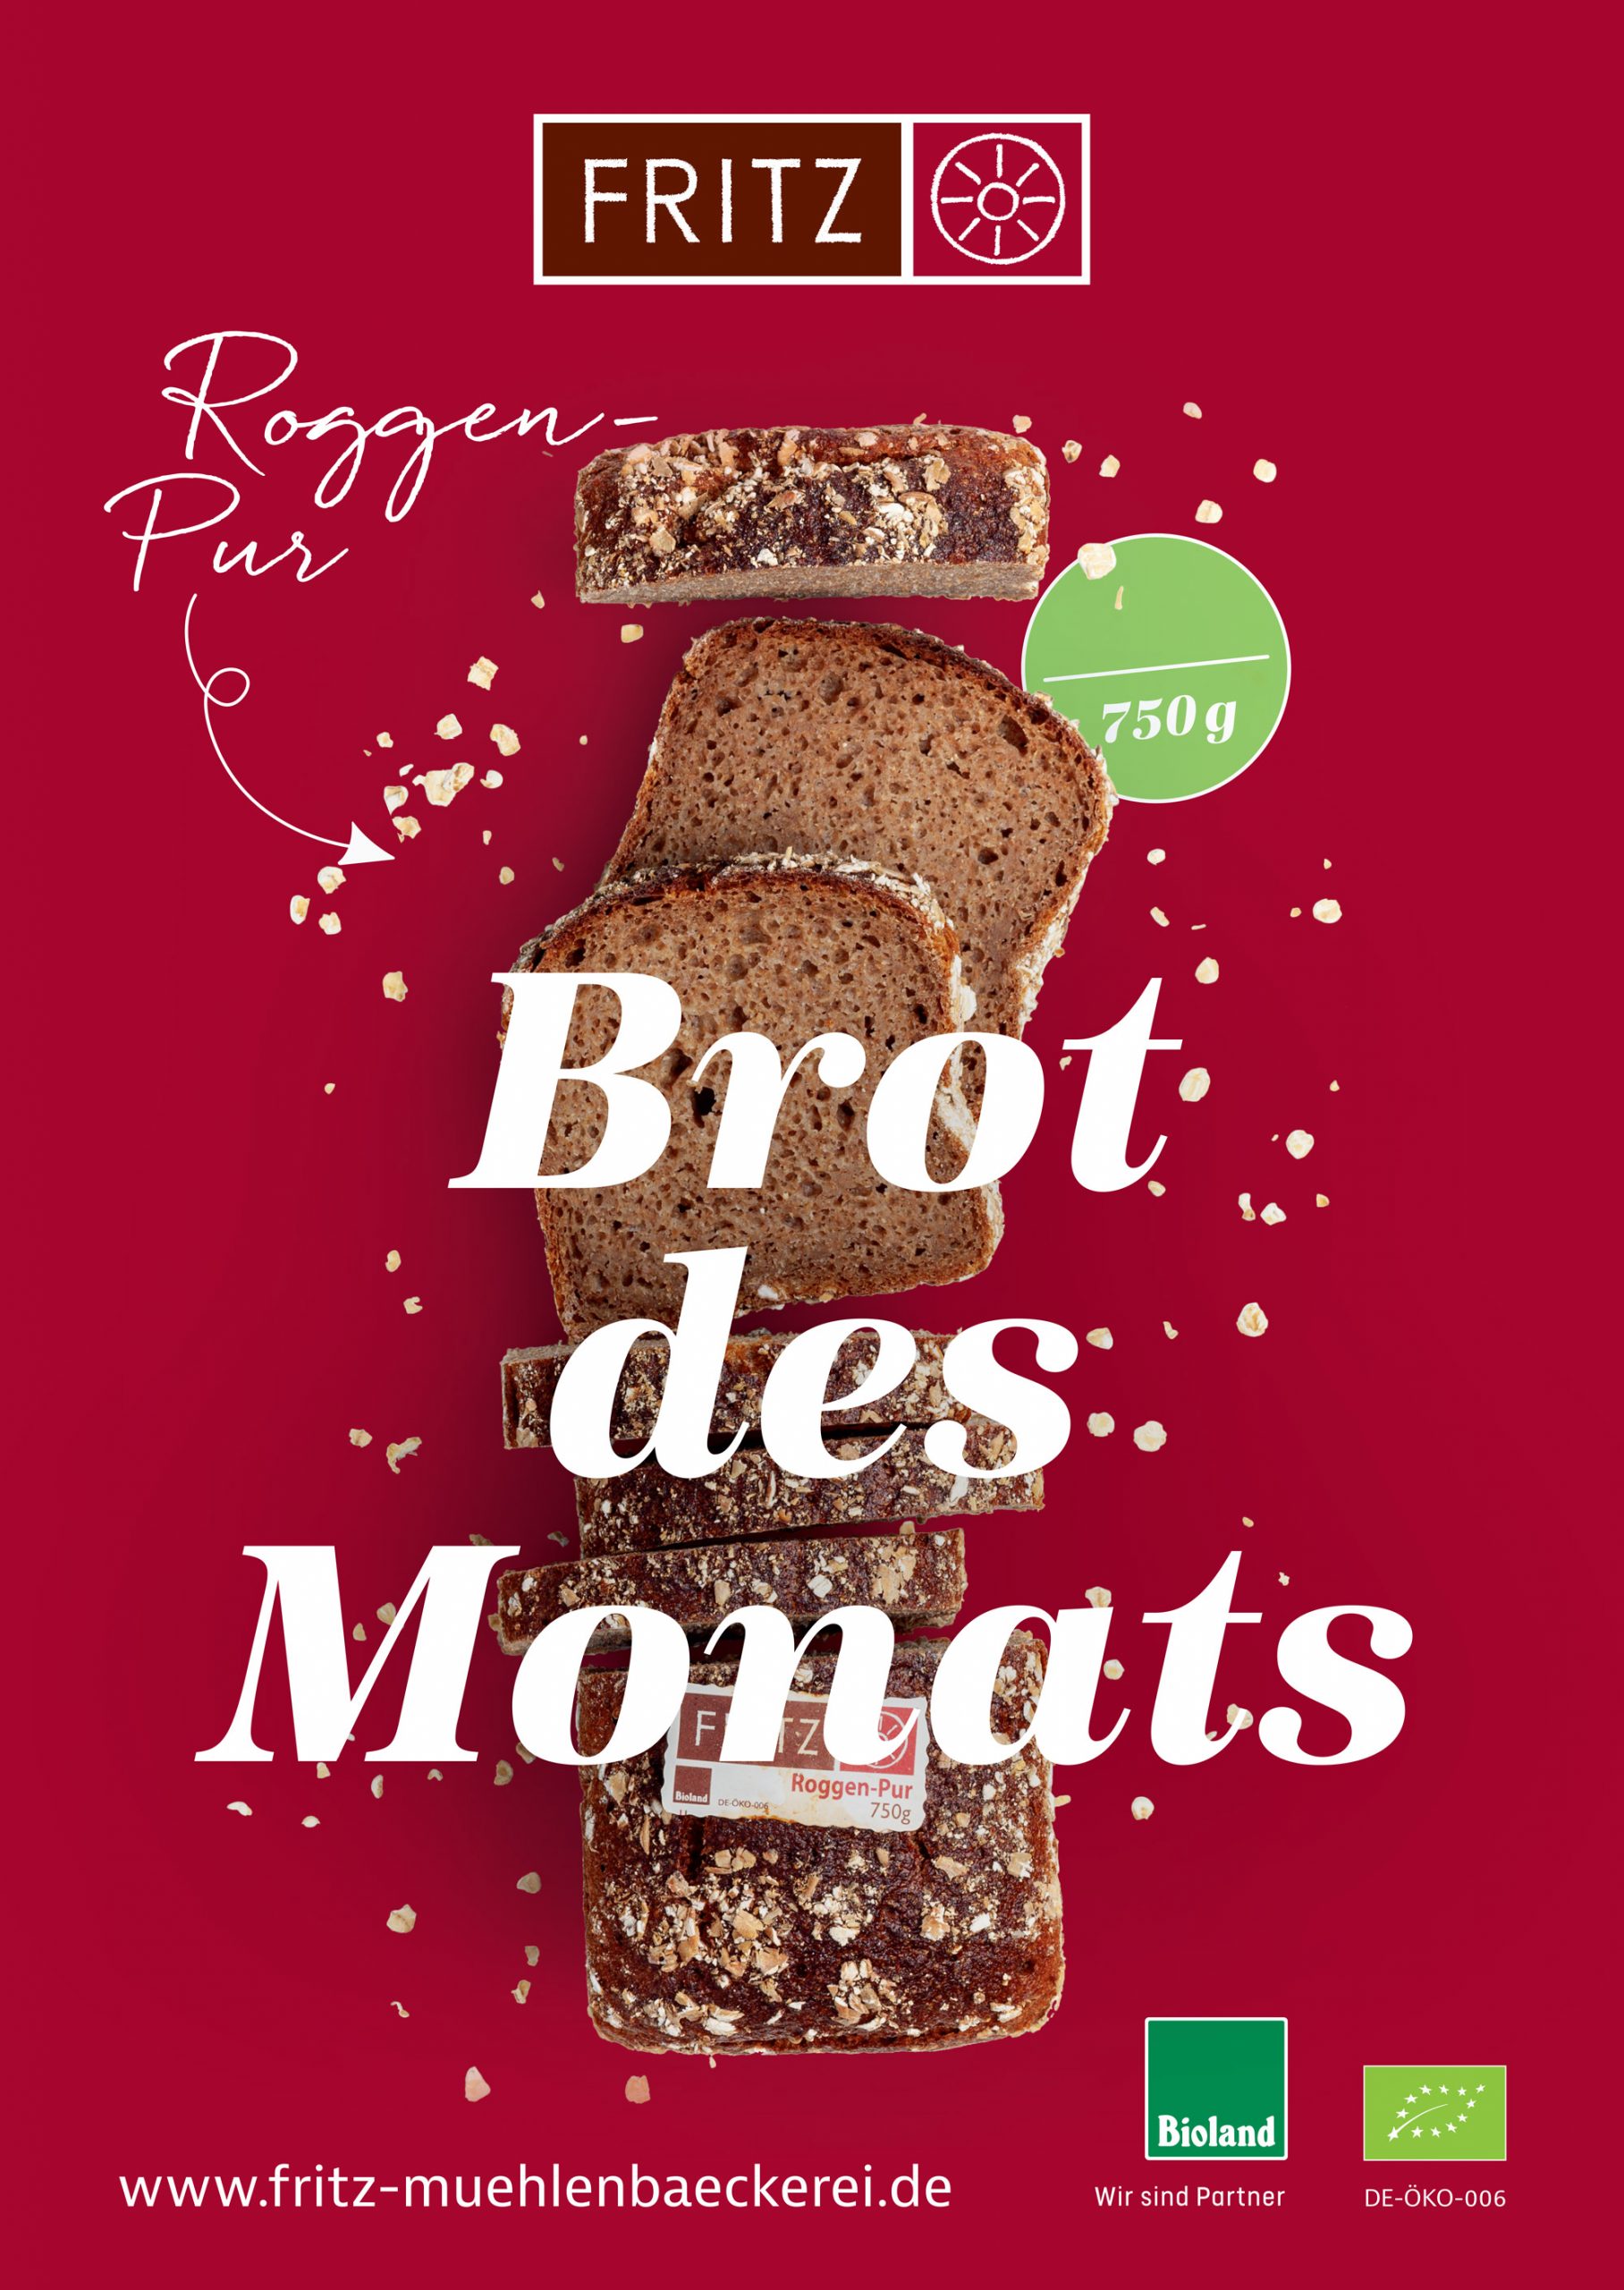 Fritz Mühlenbäckerei | Corporate Design | Plakat | Brot des Monats